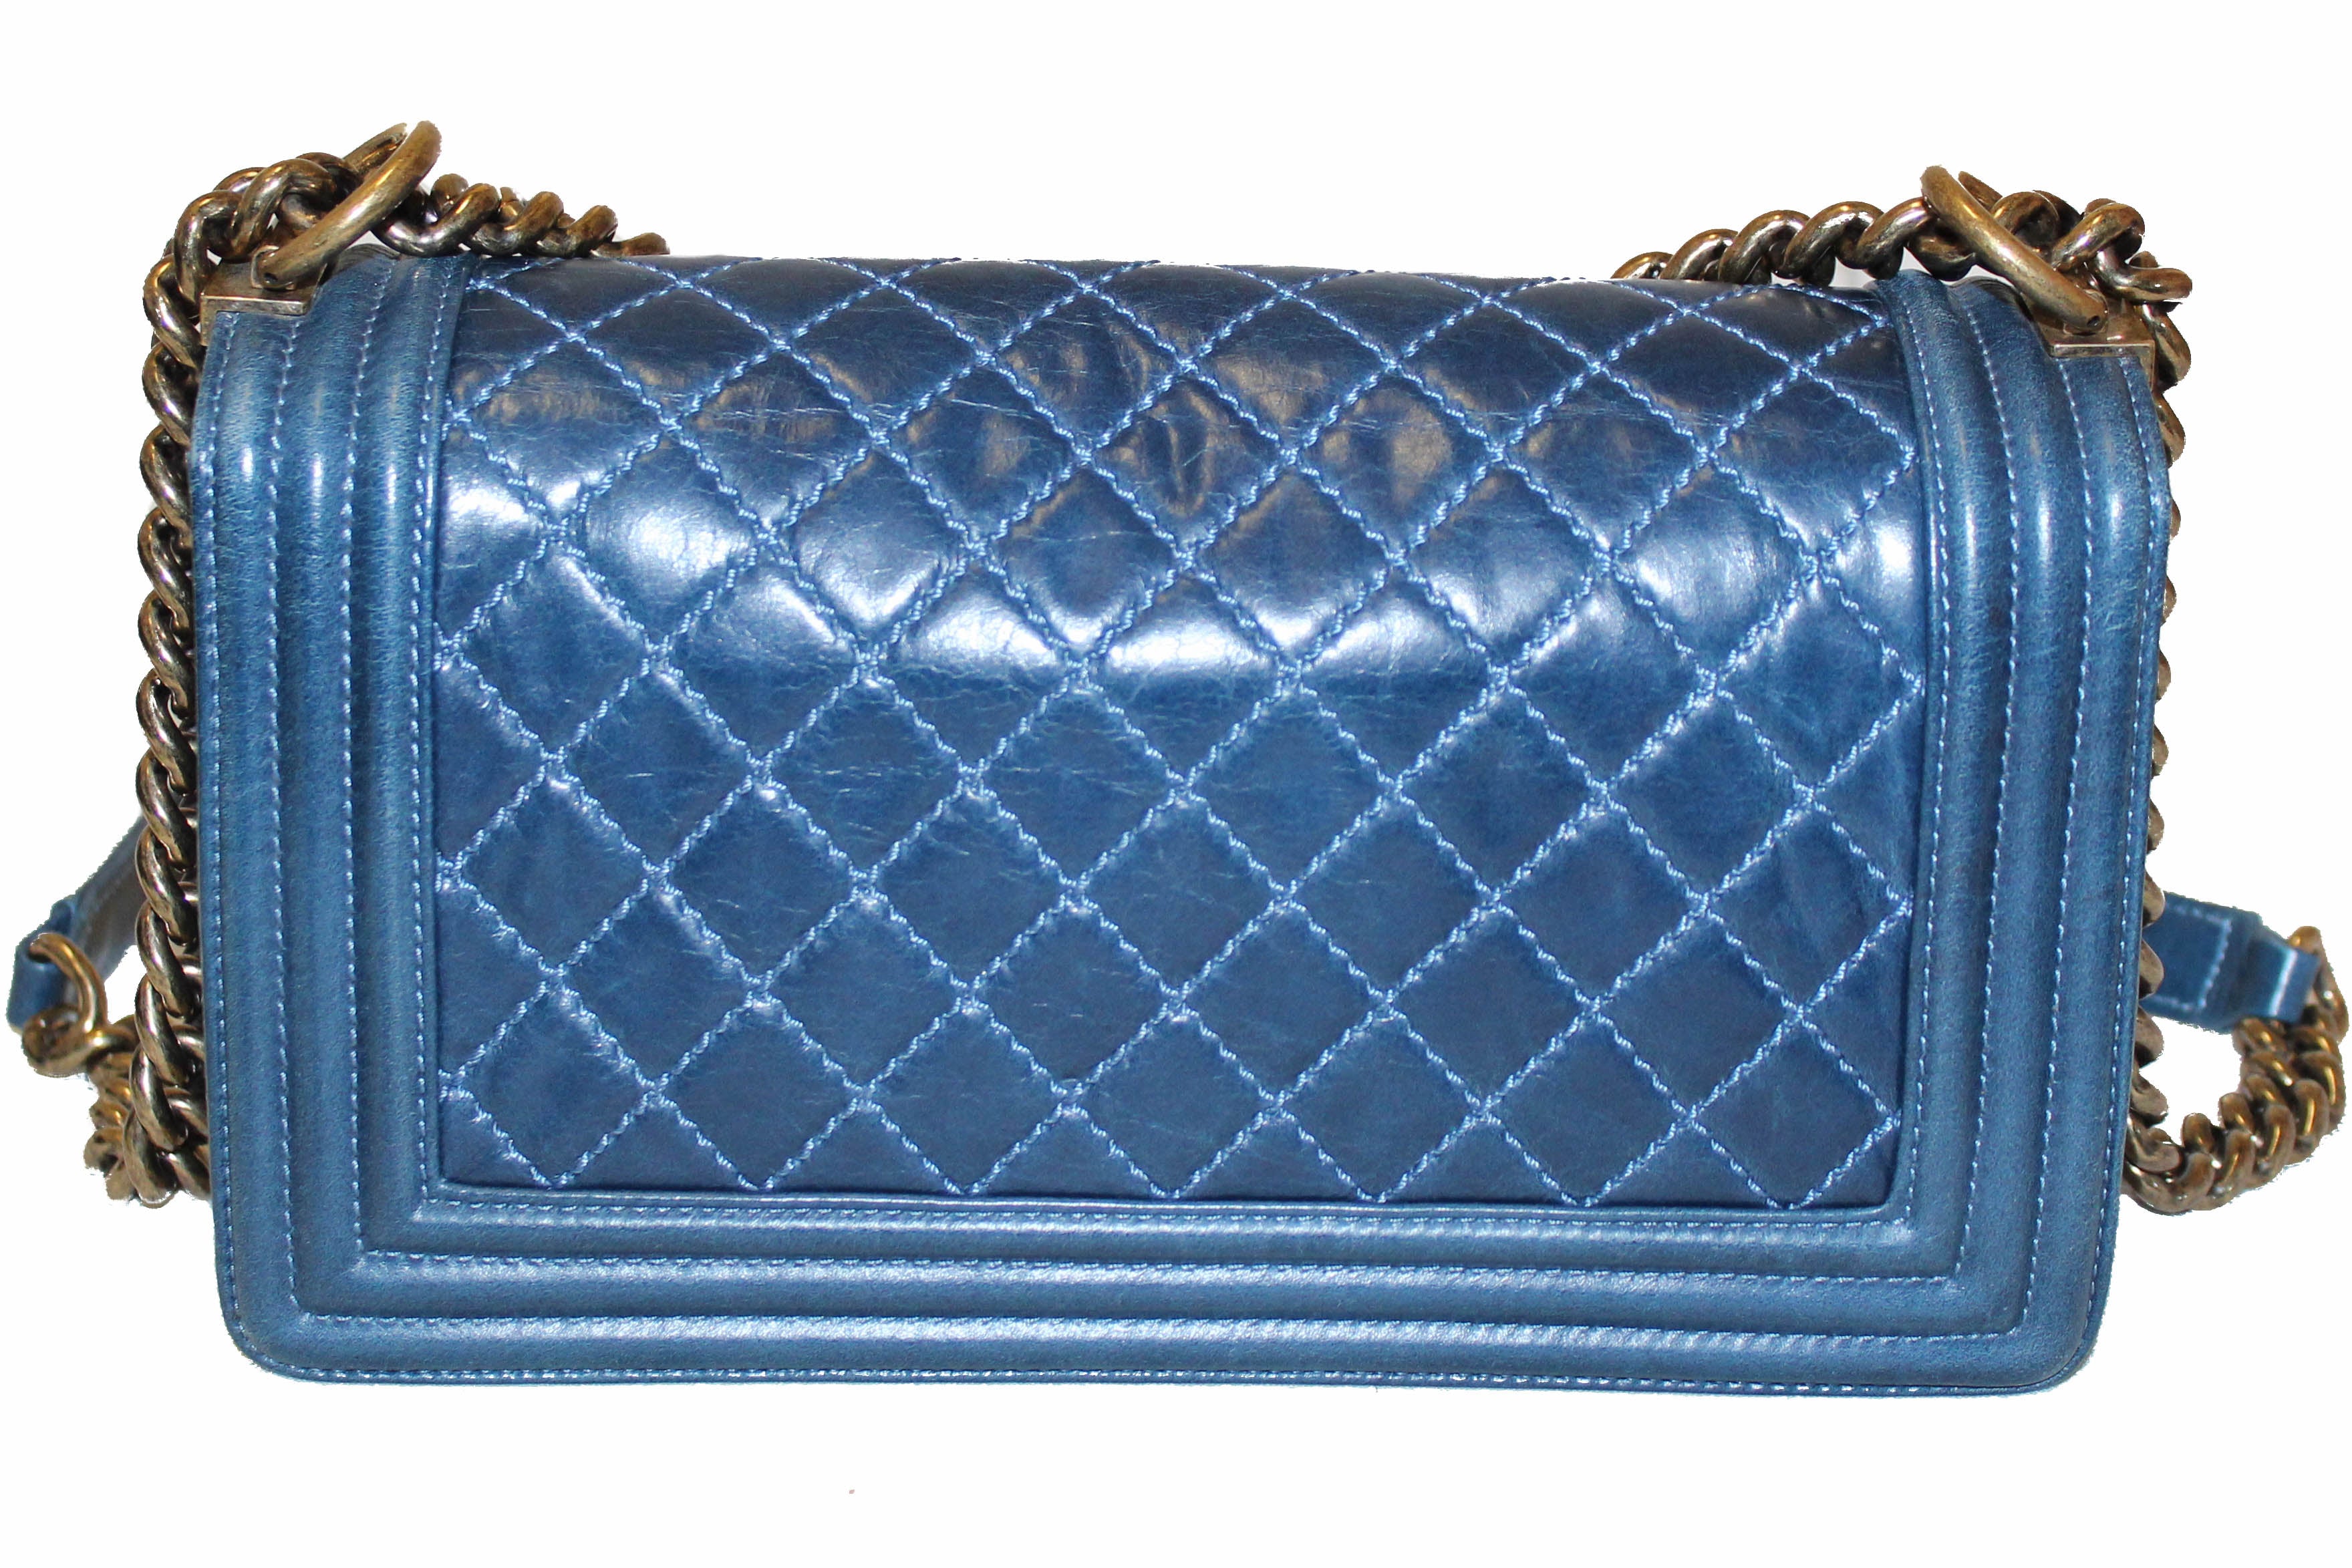 Authentic Chanel Blue Quilted Aged Calfskin Old Medium Boy Shoulder Bag